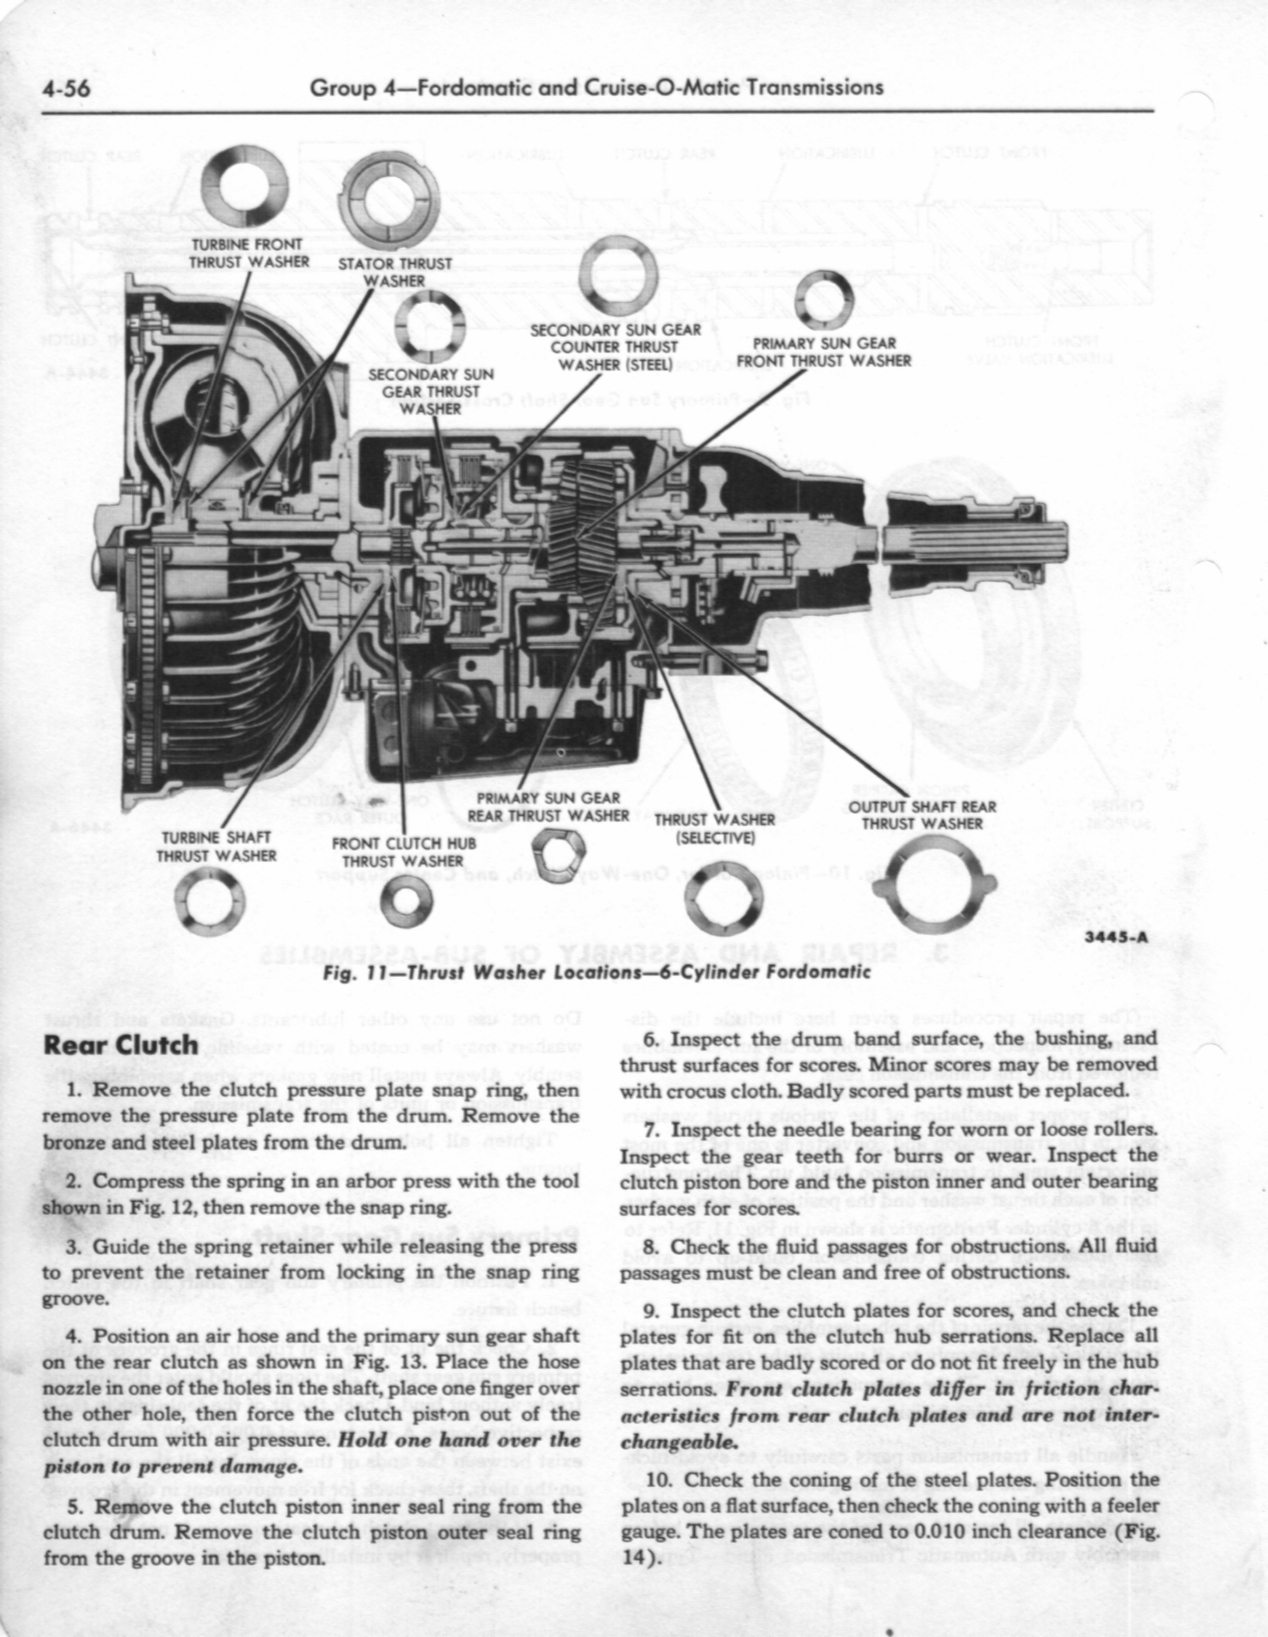 Ford cruise-o-matic transmission #2